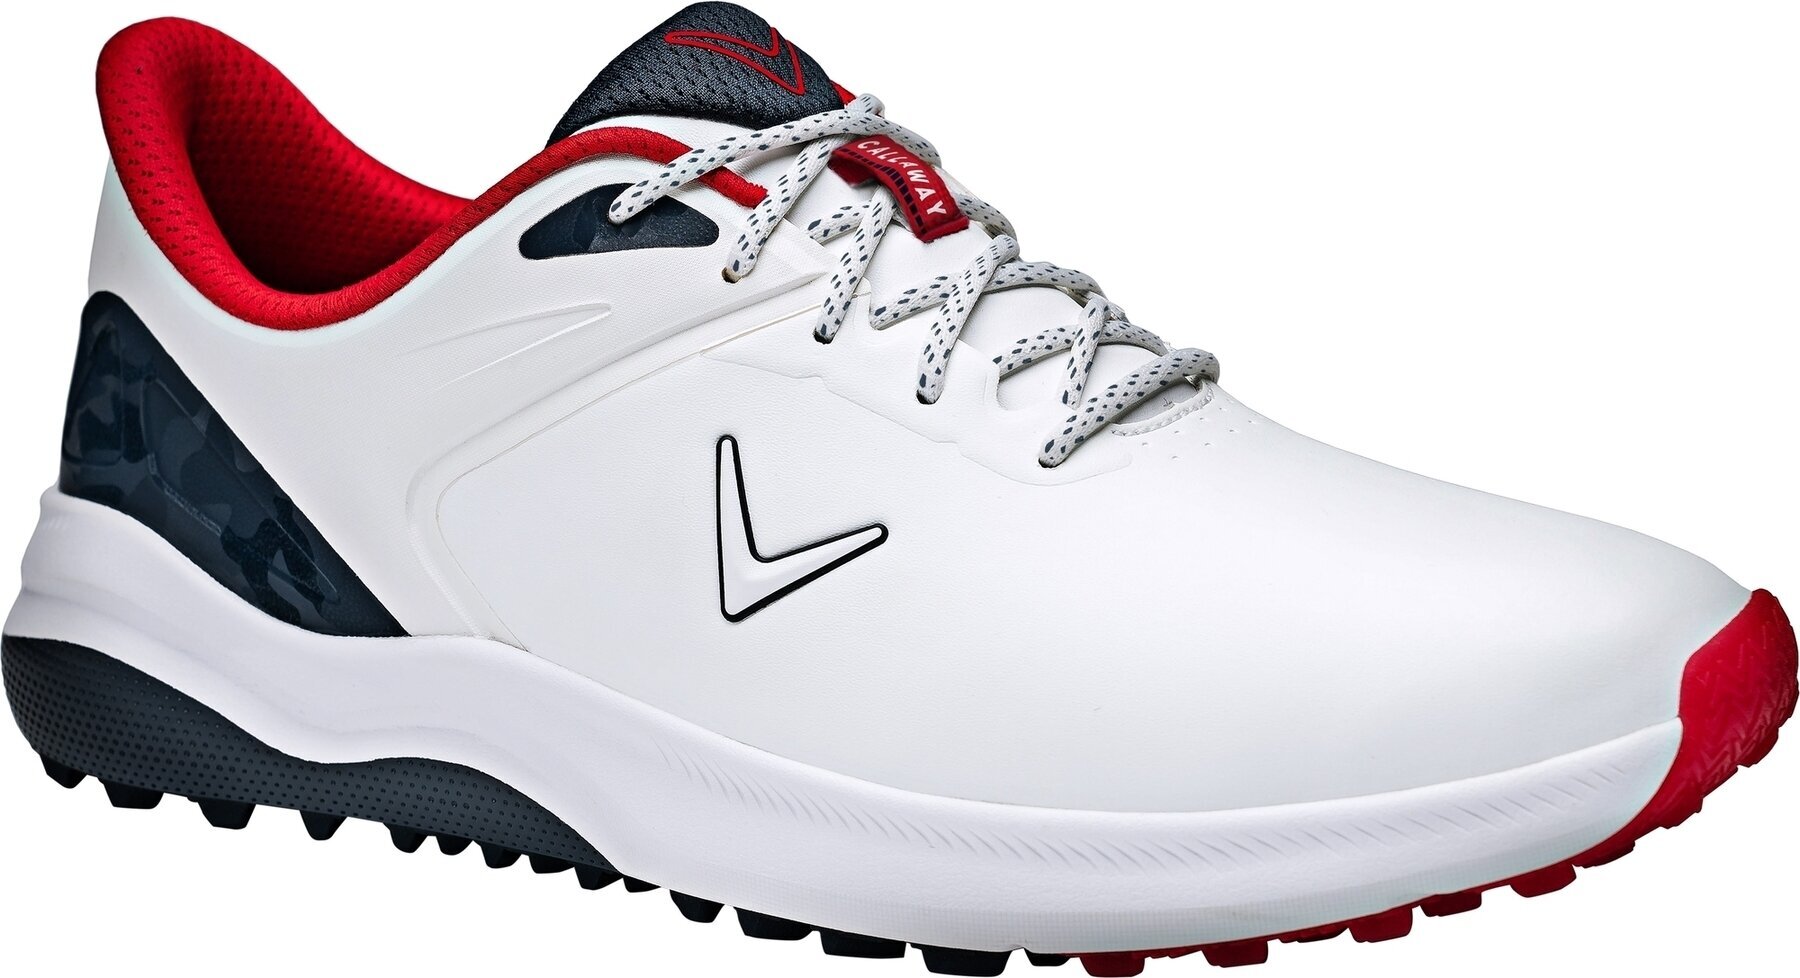 Miesten golfkengät Callaway Lazer Mens Golf Shoes White/Navy/Red 46